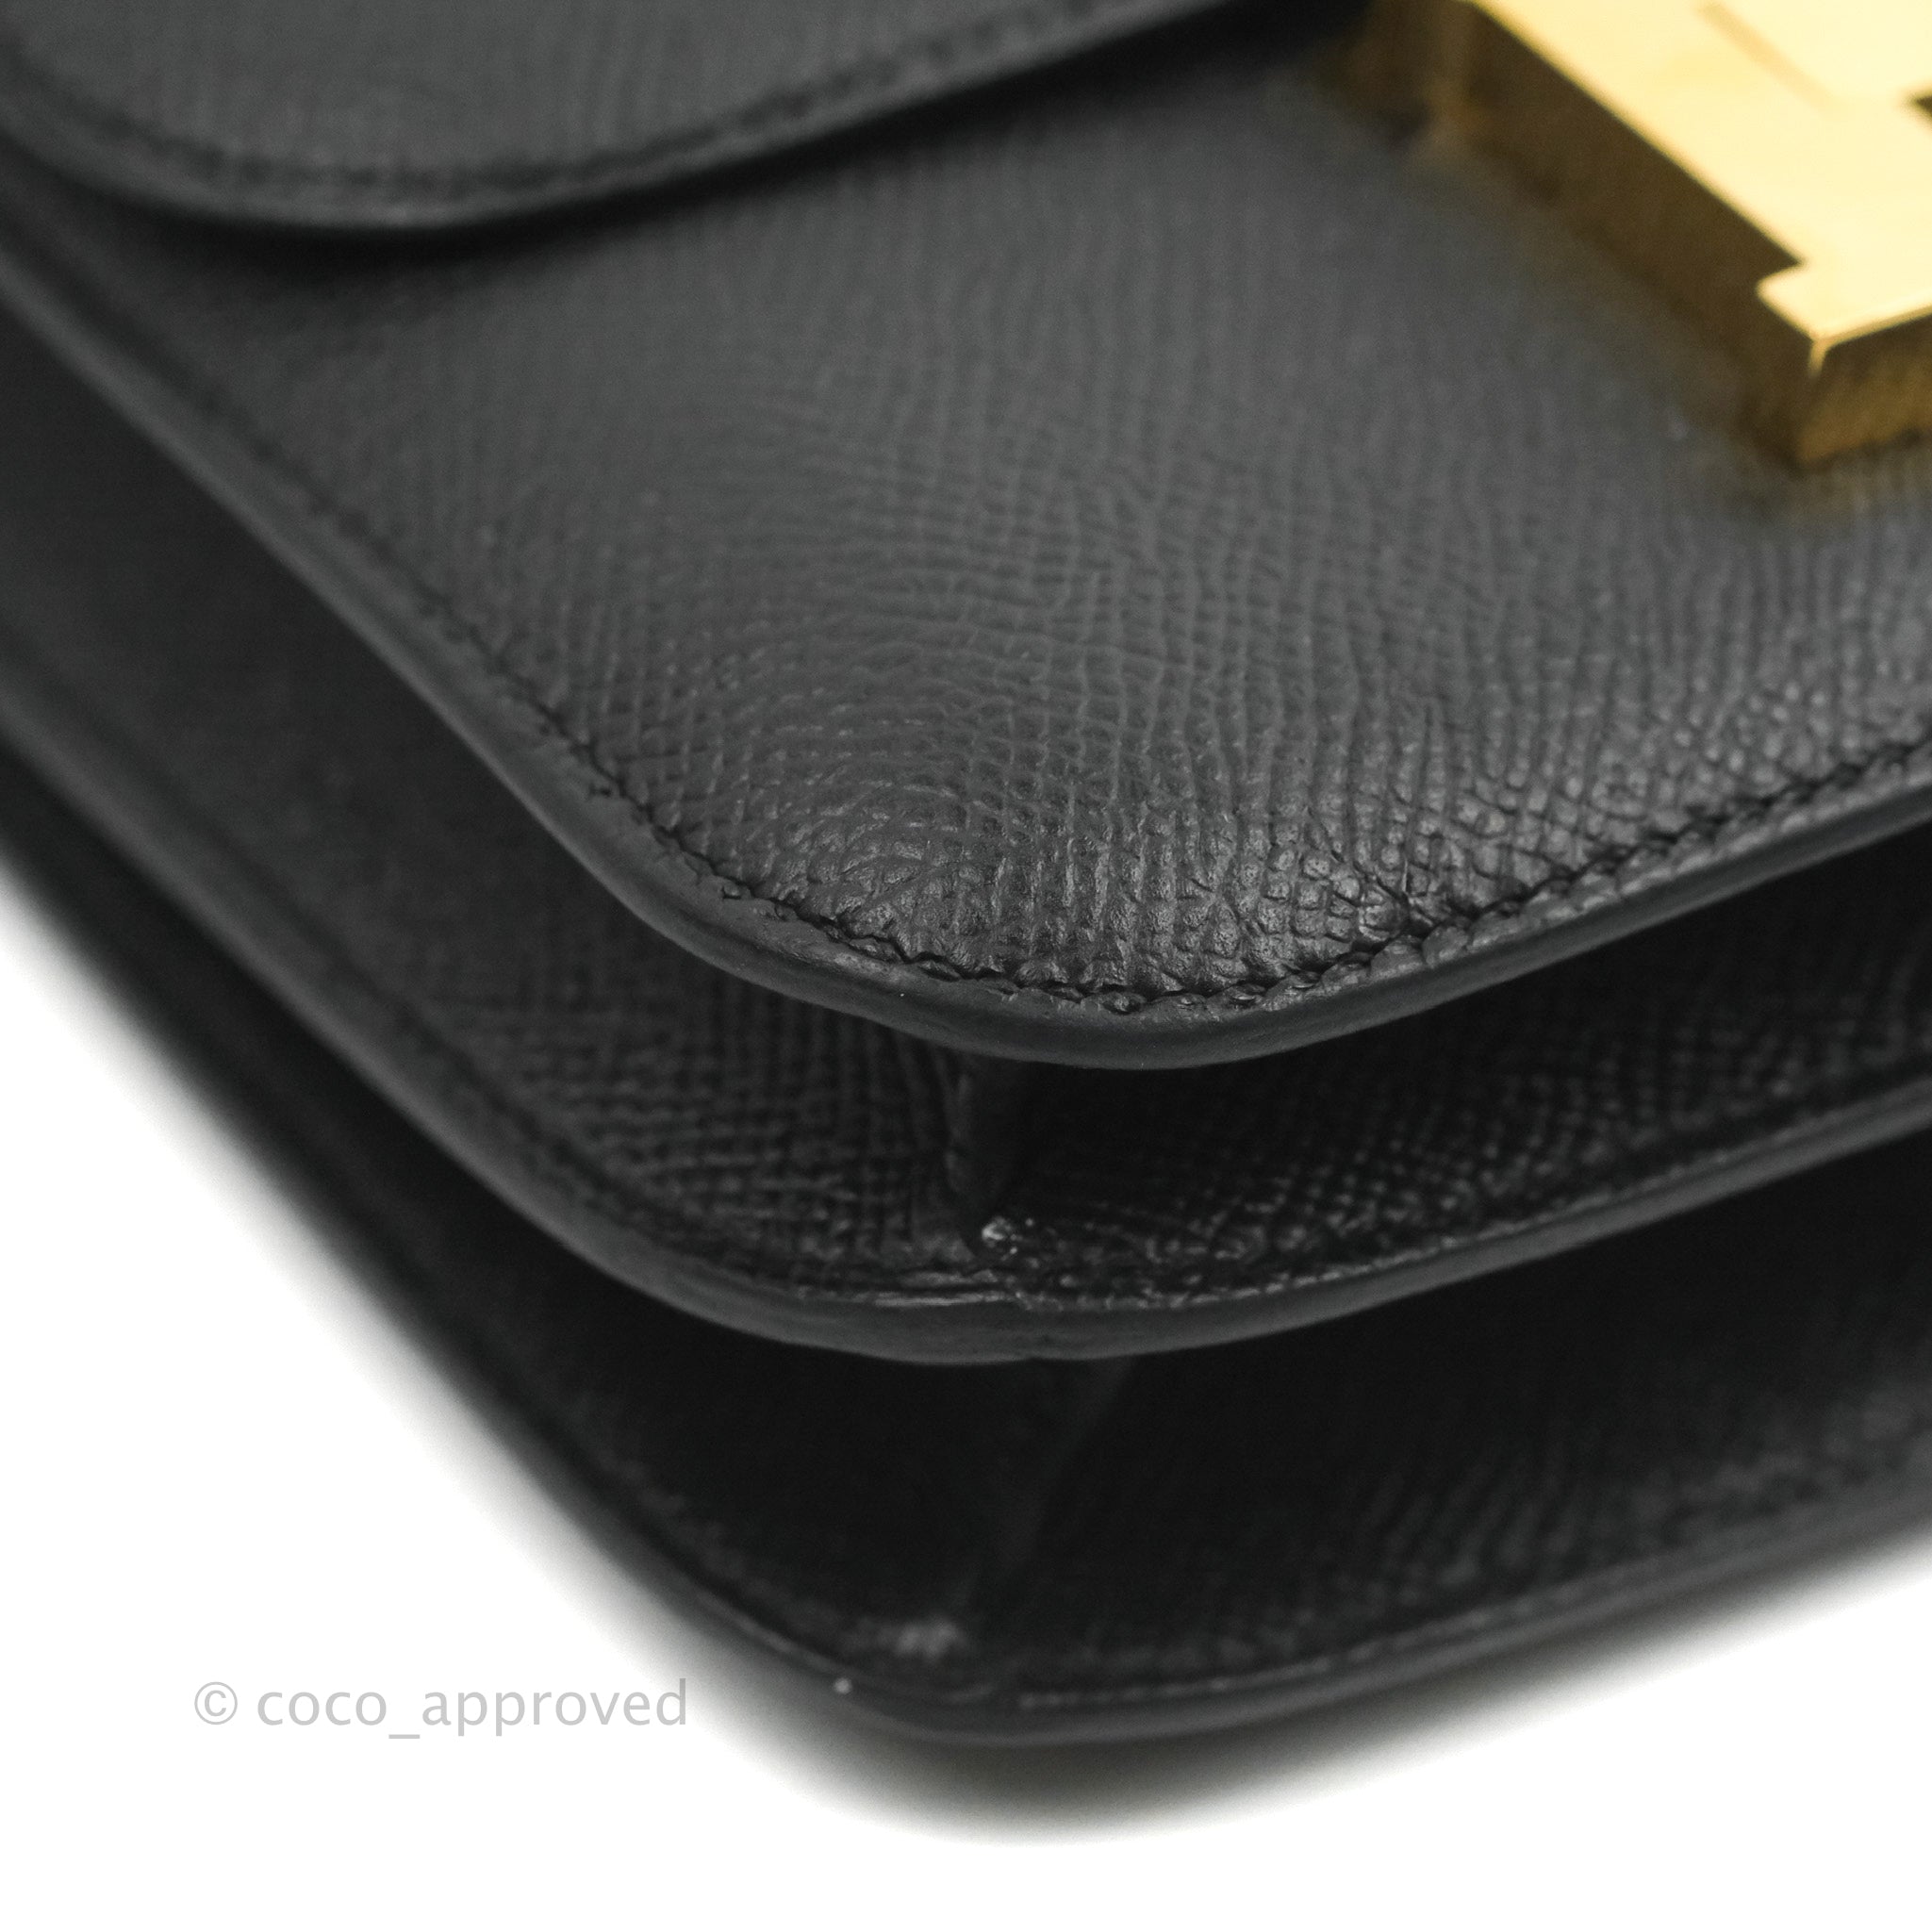 Hermès Mini Constance 18 Black Epsom with Gold Hardware - 2019, D